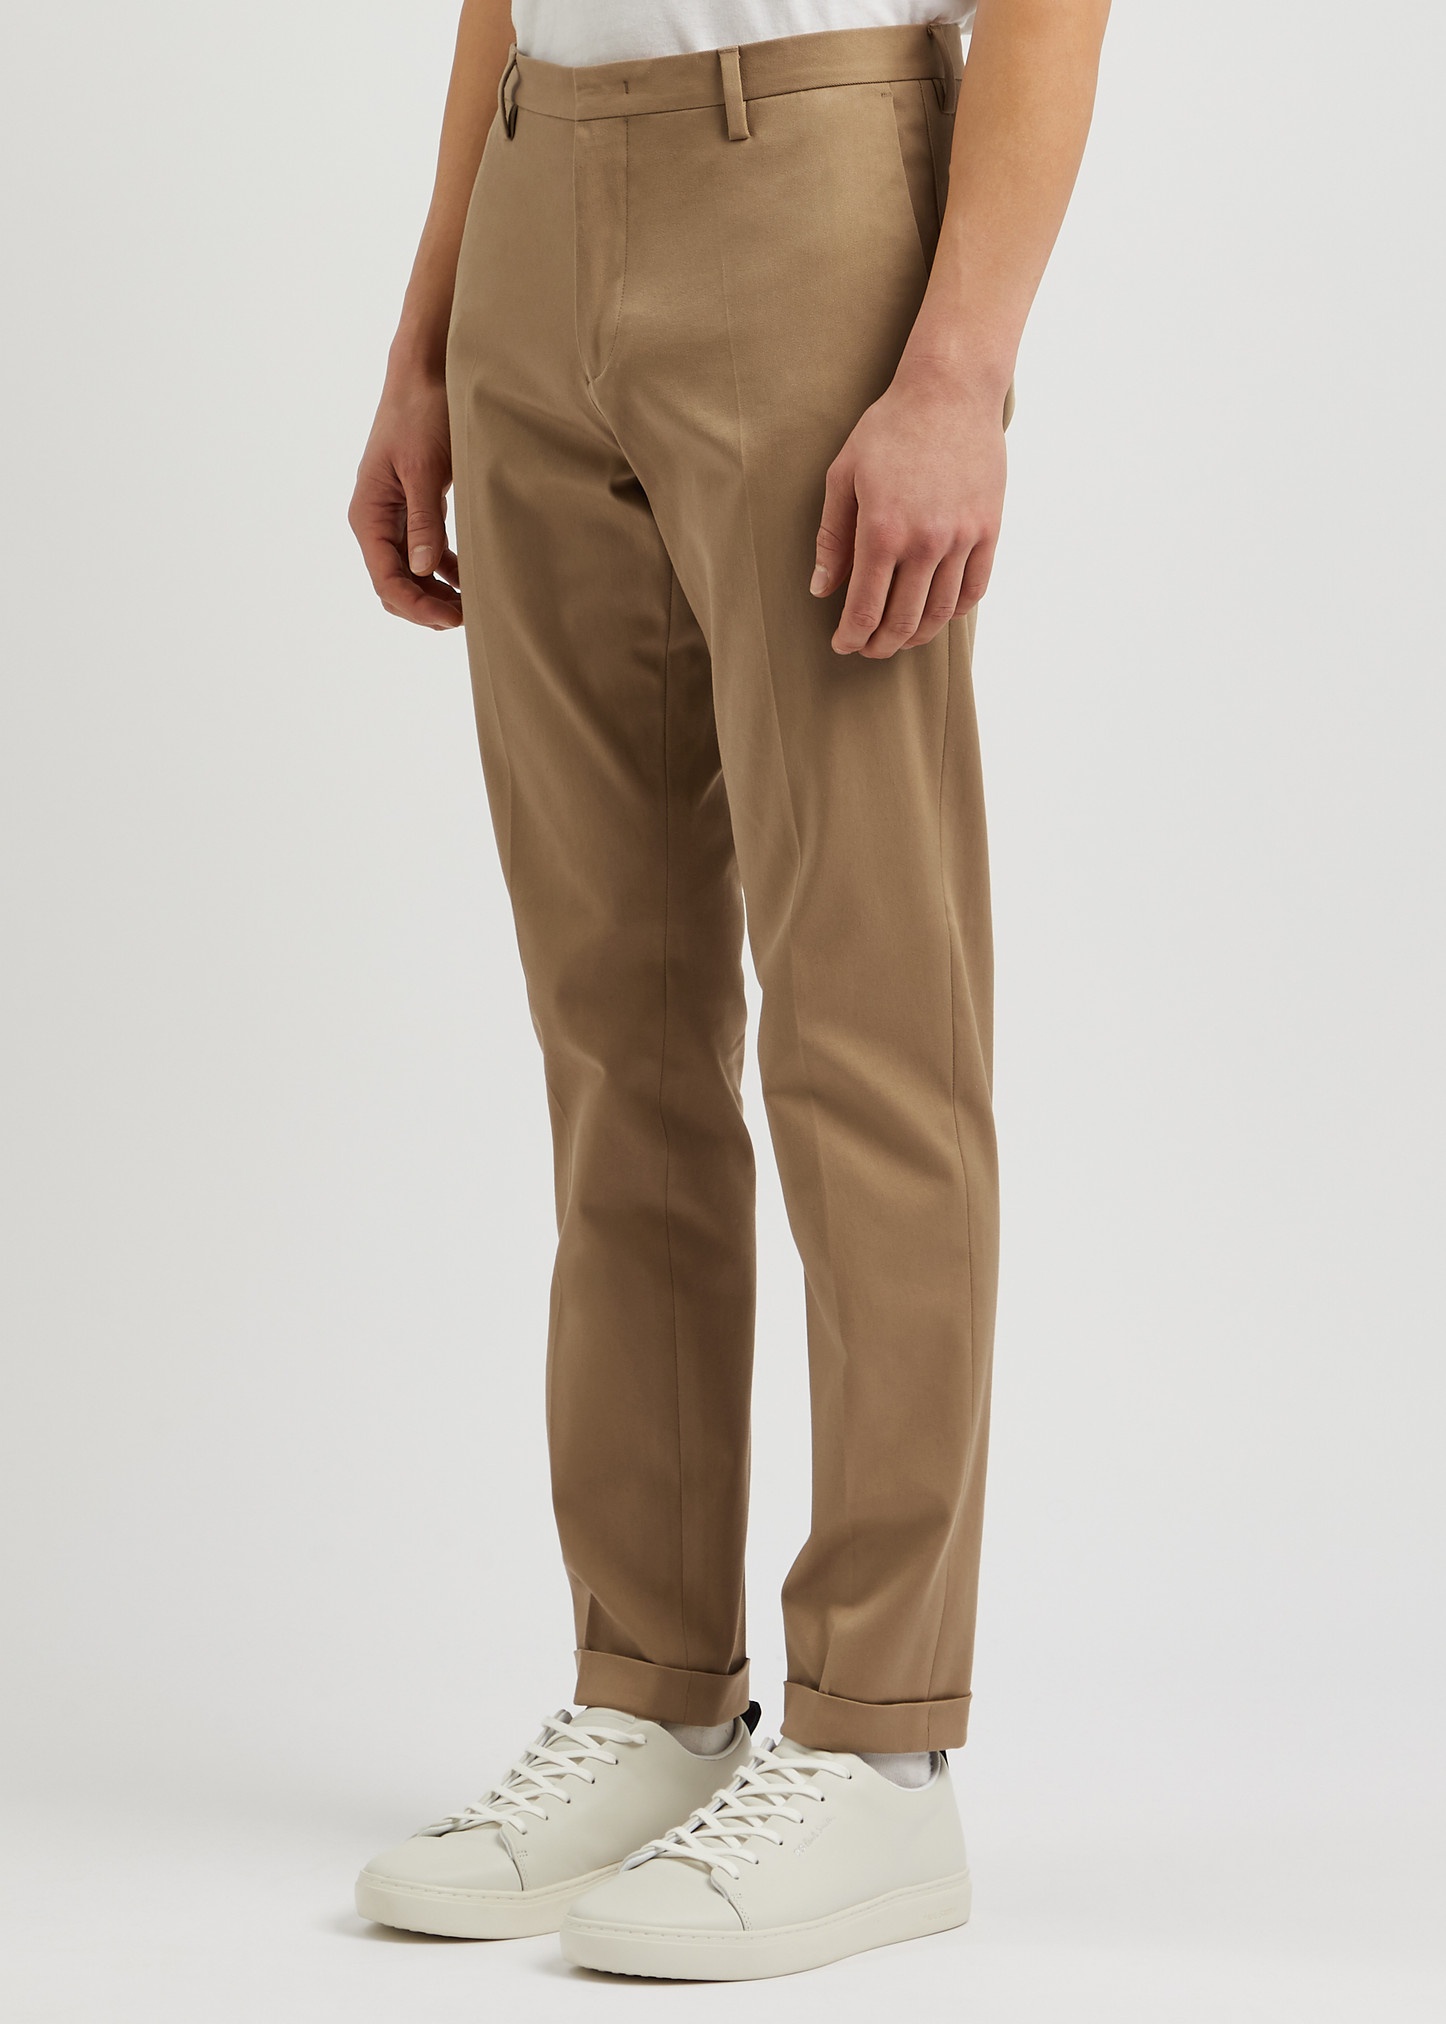 PAUL SMITH Slim-leg stretch-cotton trousers